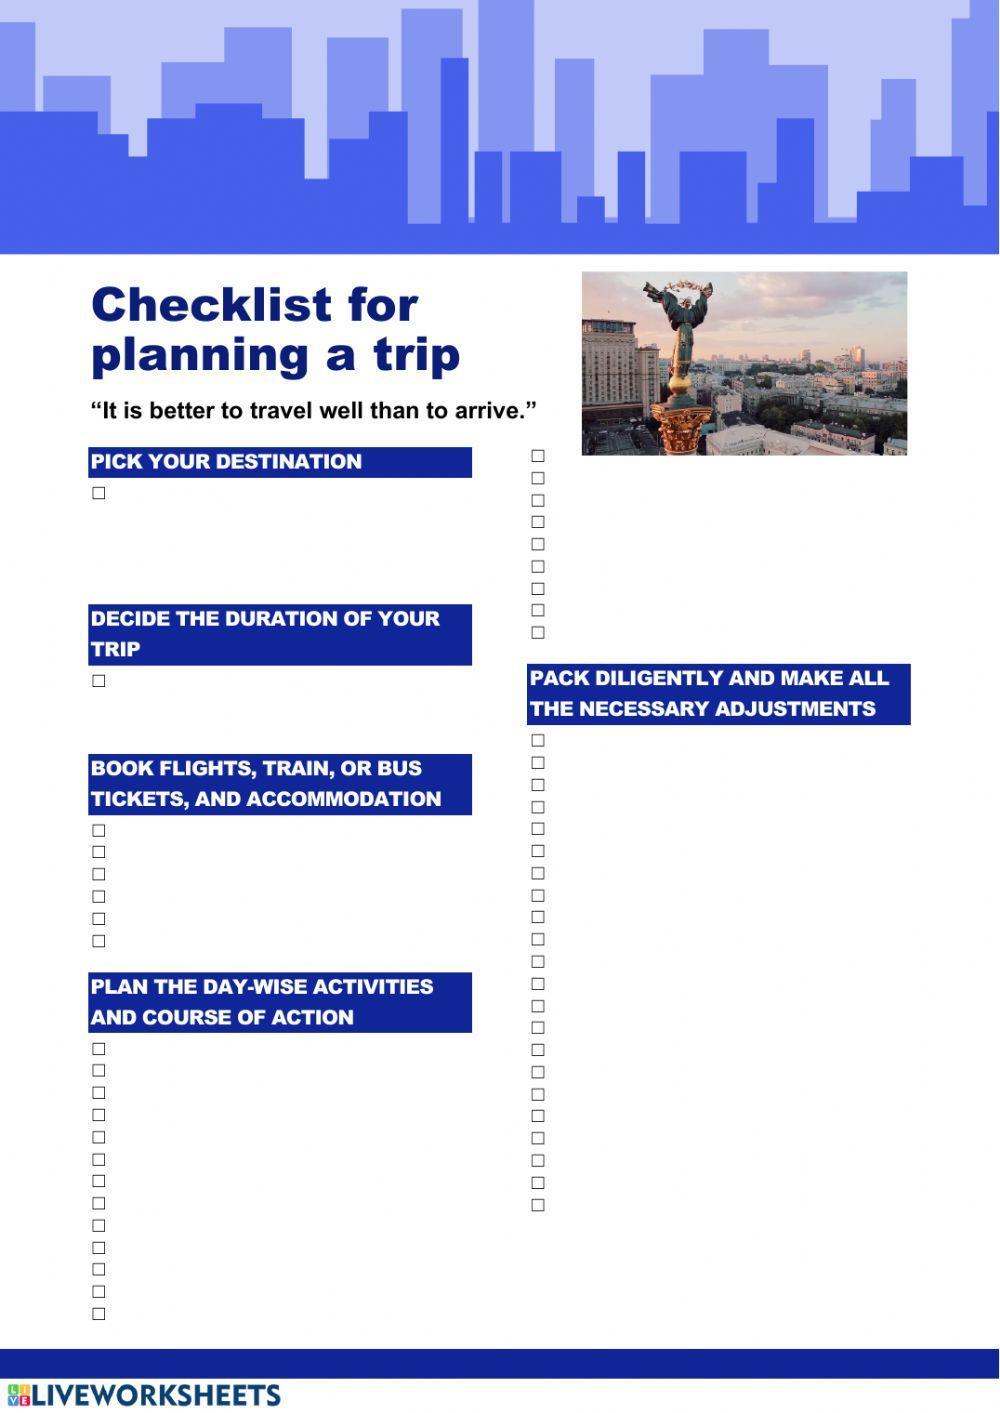 Checklist-planning a trip to Kyiv